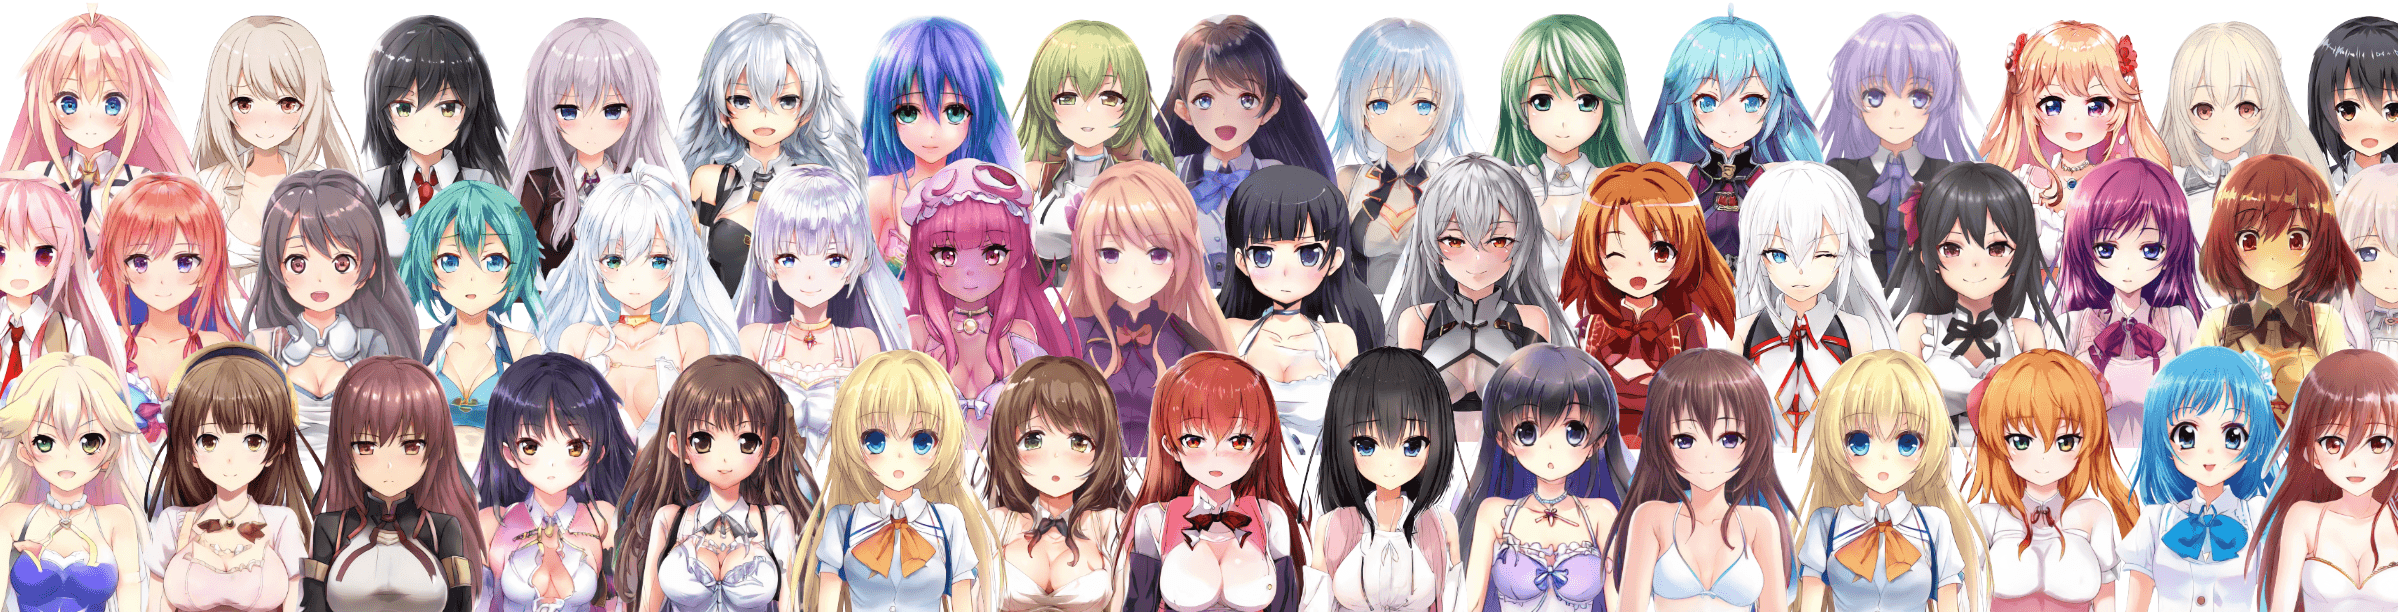 Kawaii Anime Girls Club